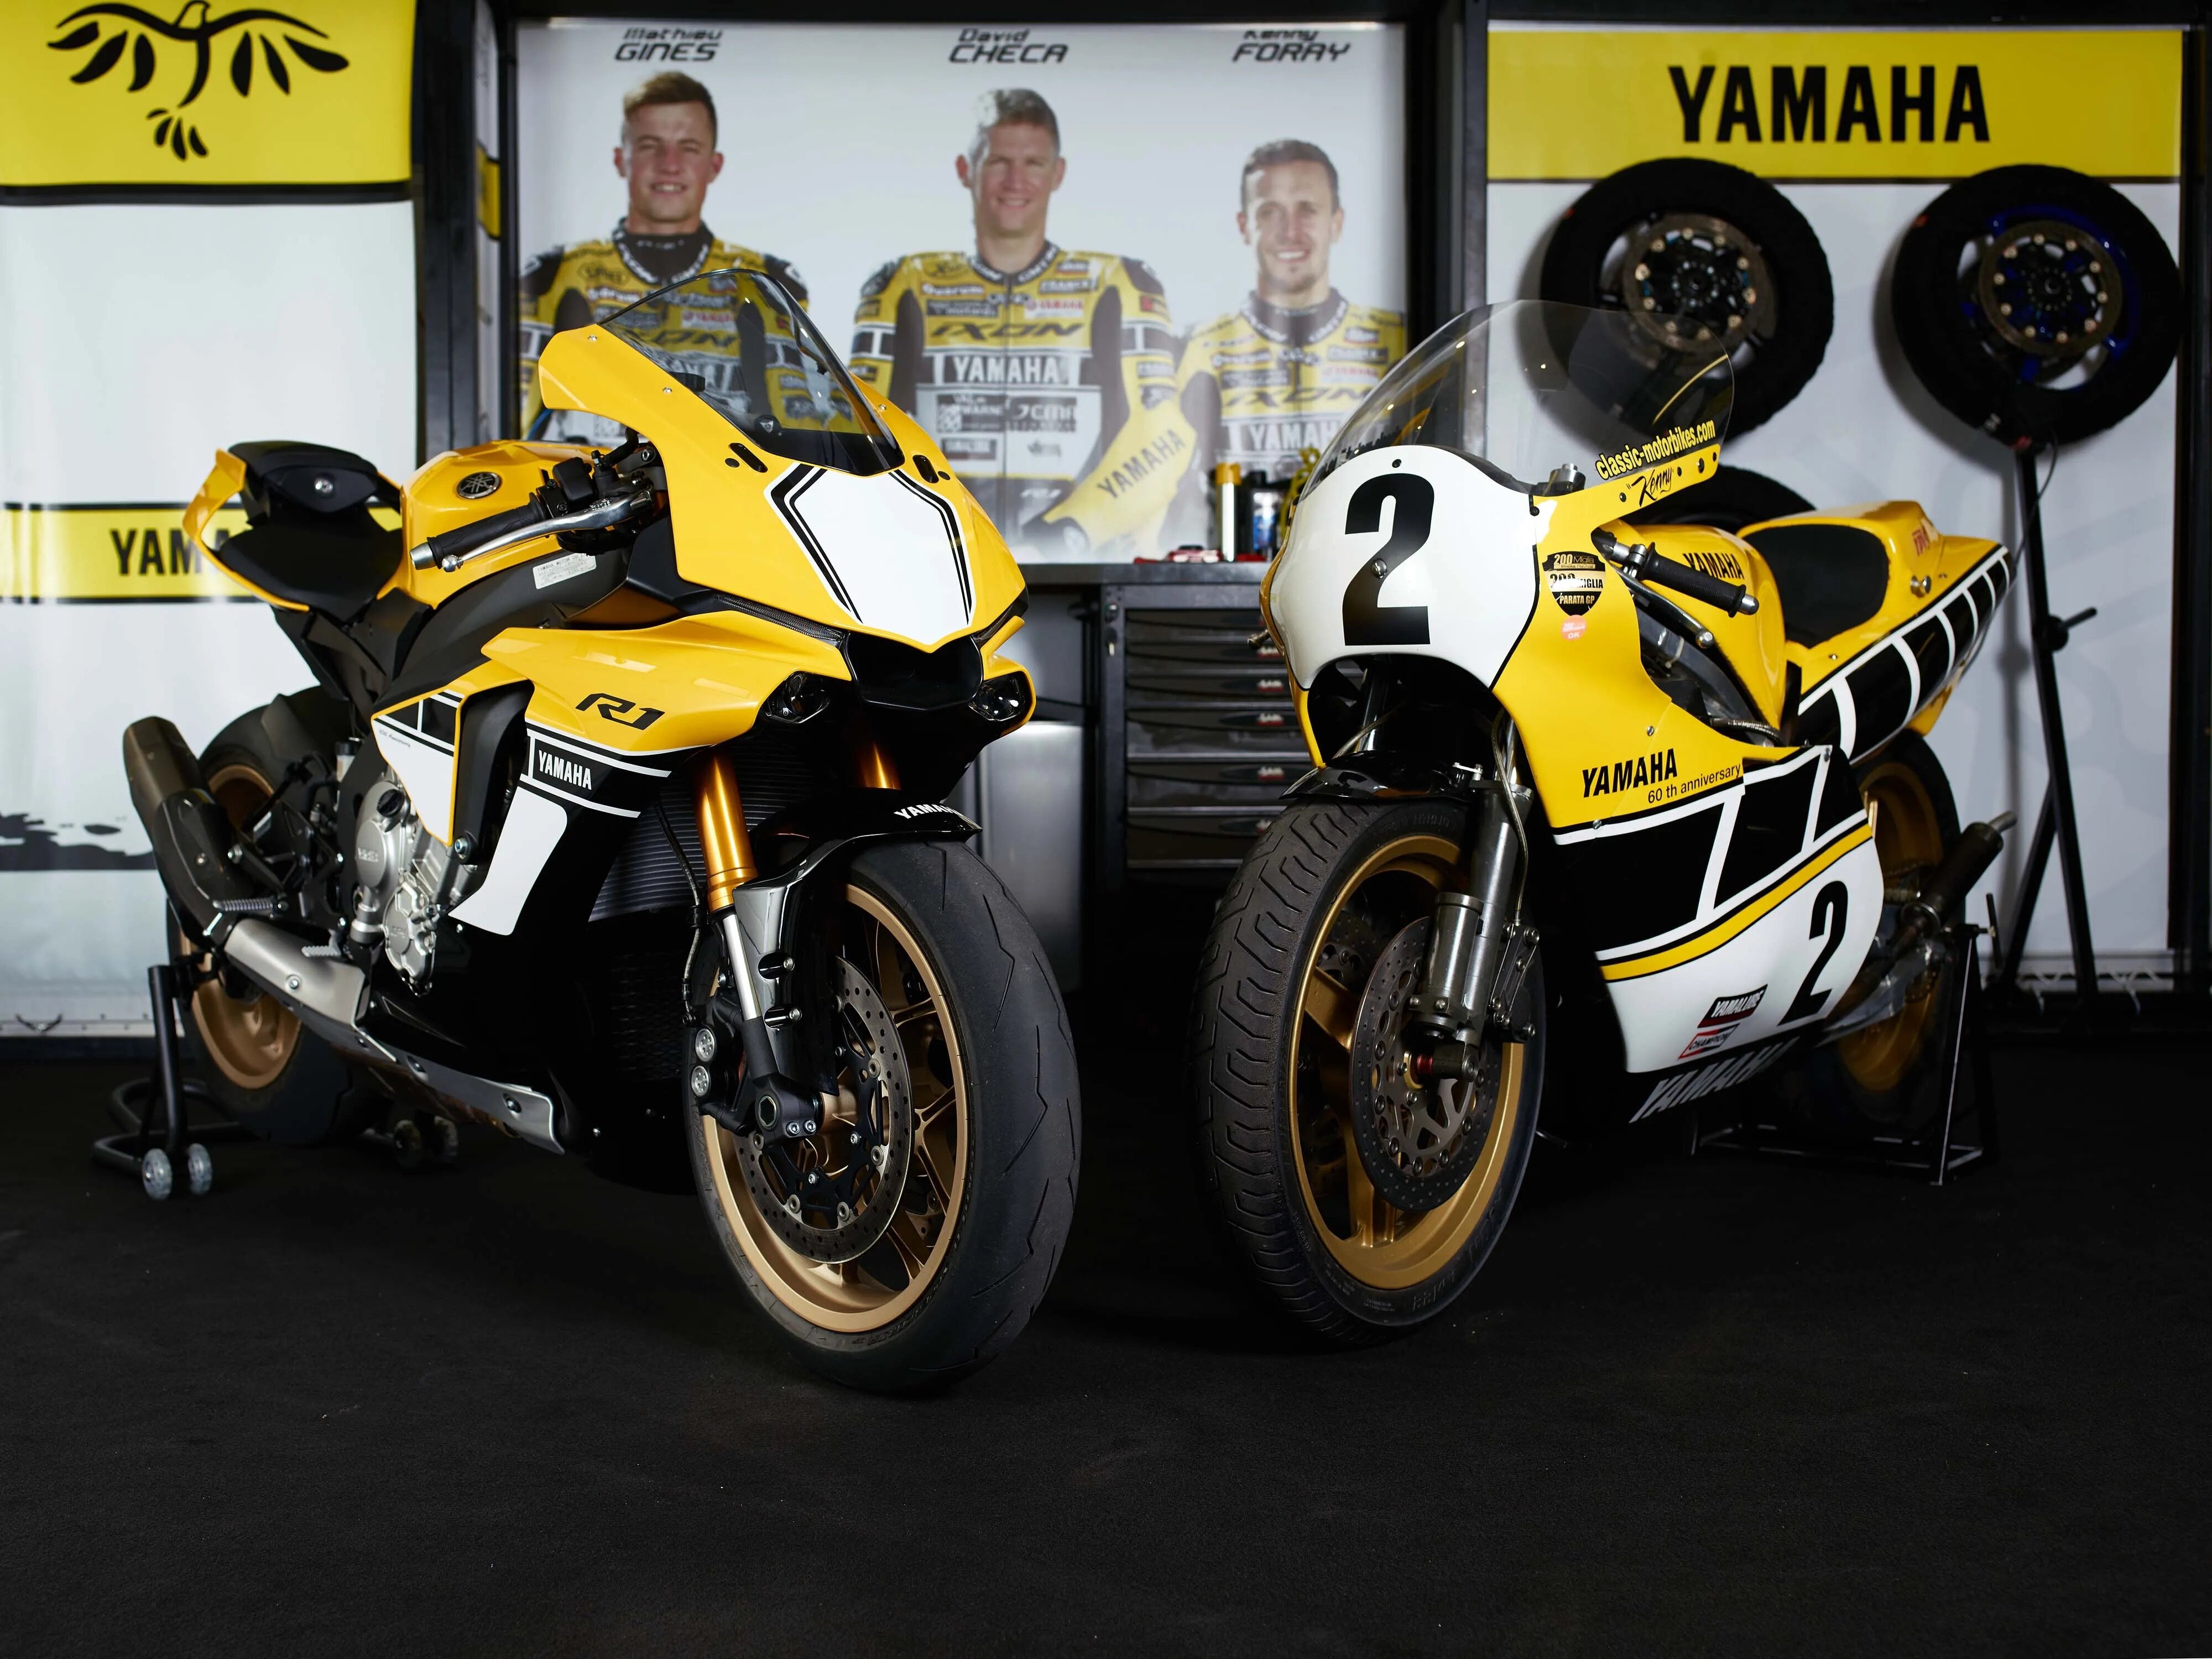 60th-Anniversary-Yamaha-YZF-R1-yellow-black-ewc-09.jpg.webp.60c790324a4d389f279c941534e21567.webp